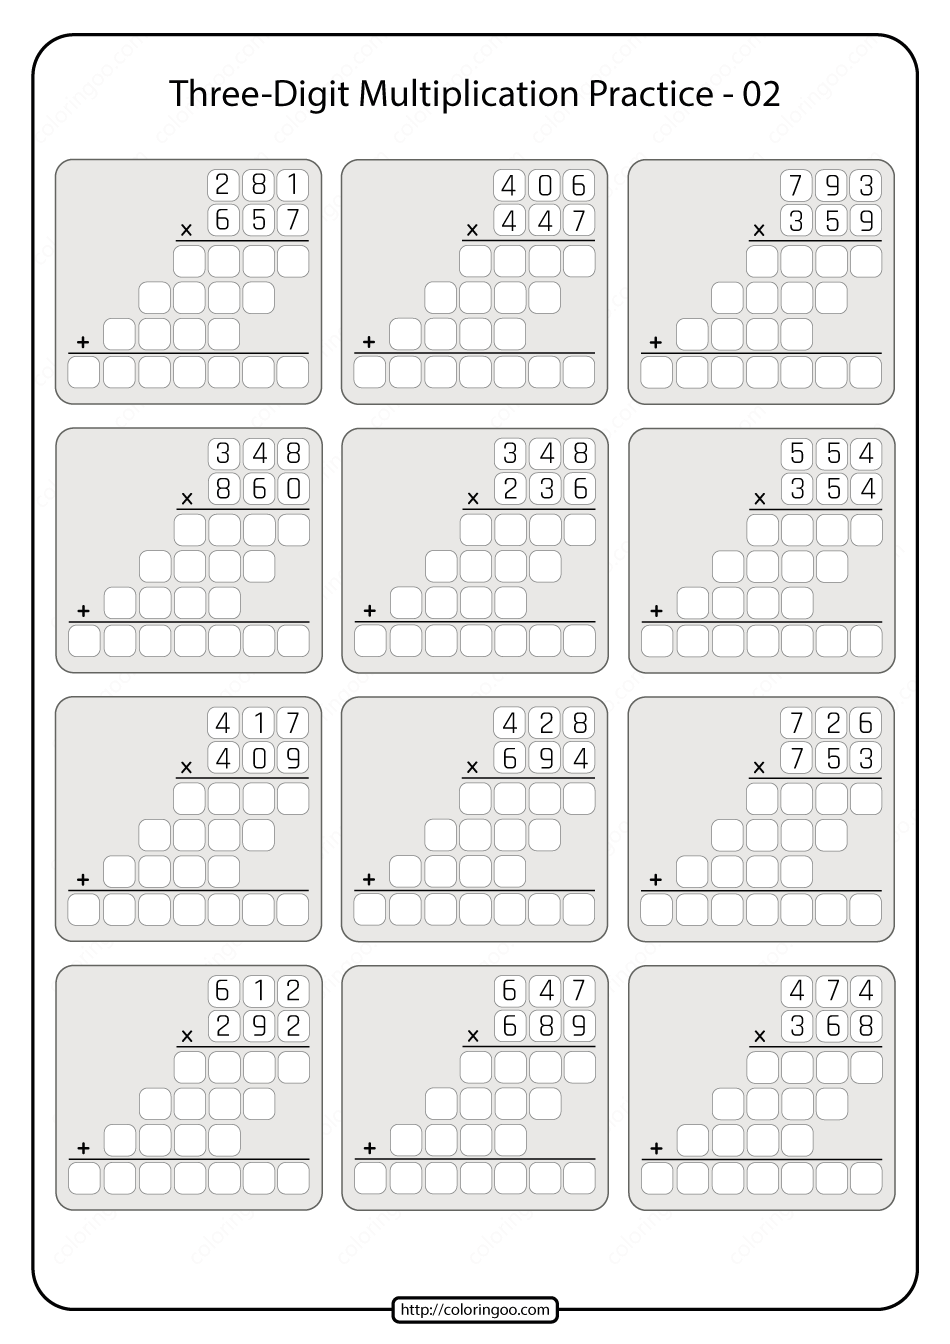 printable three digit multiplication practice 02